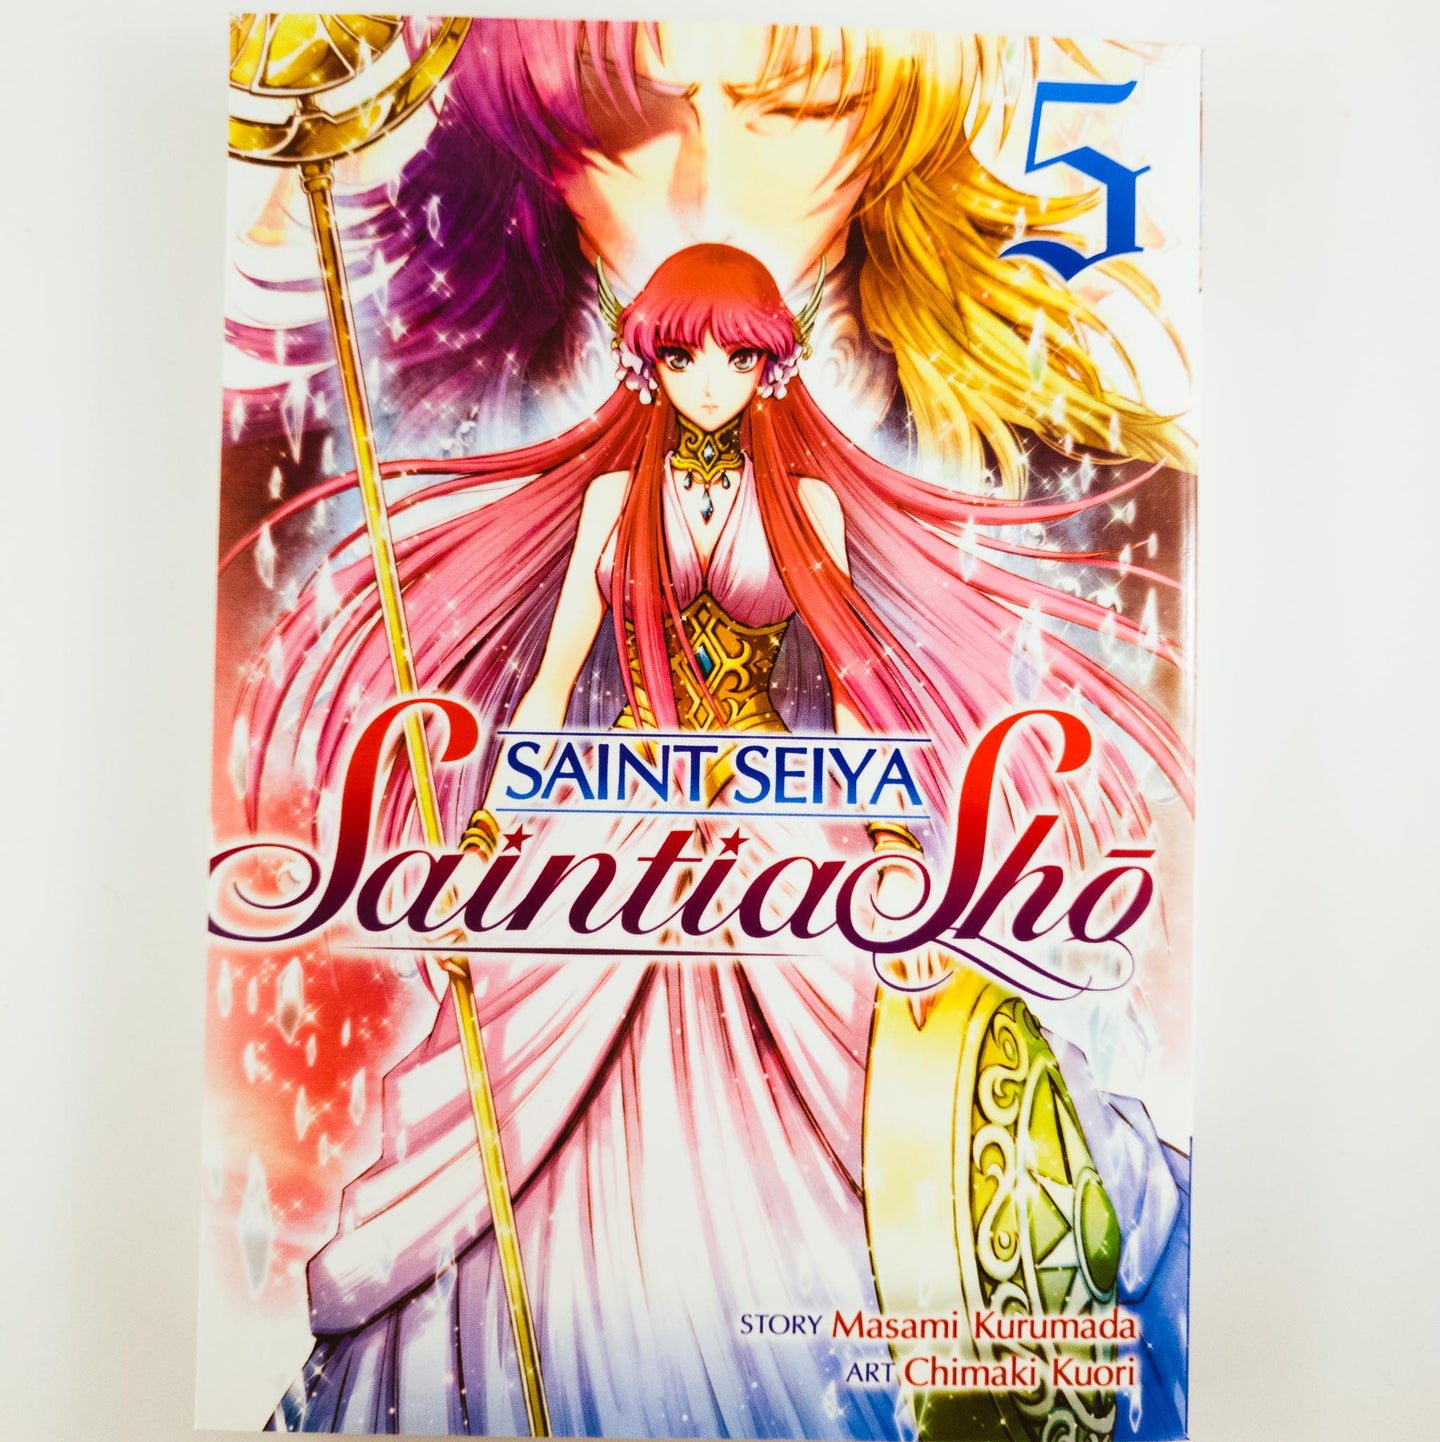 Saint Seiya: Saintia Shō Volume 5. Manga by Masami Kurumada and Chimaki Kuori.